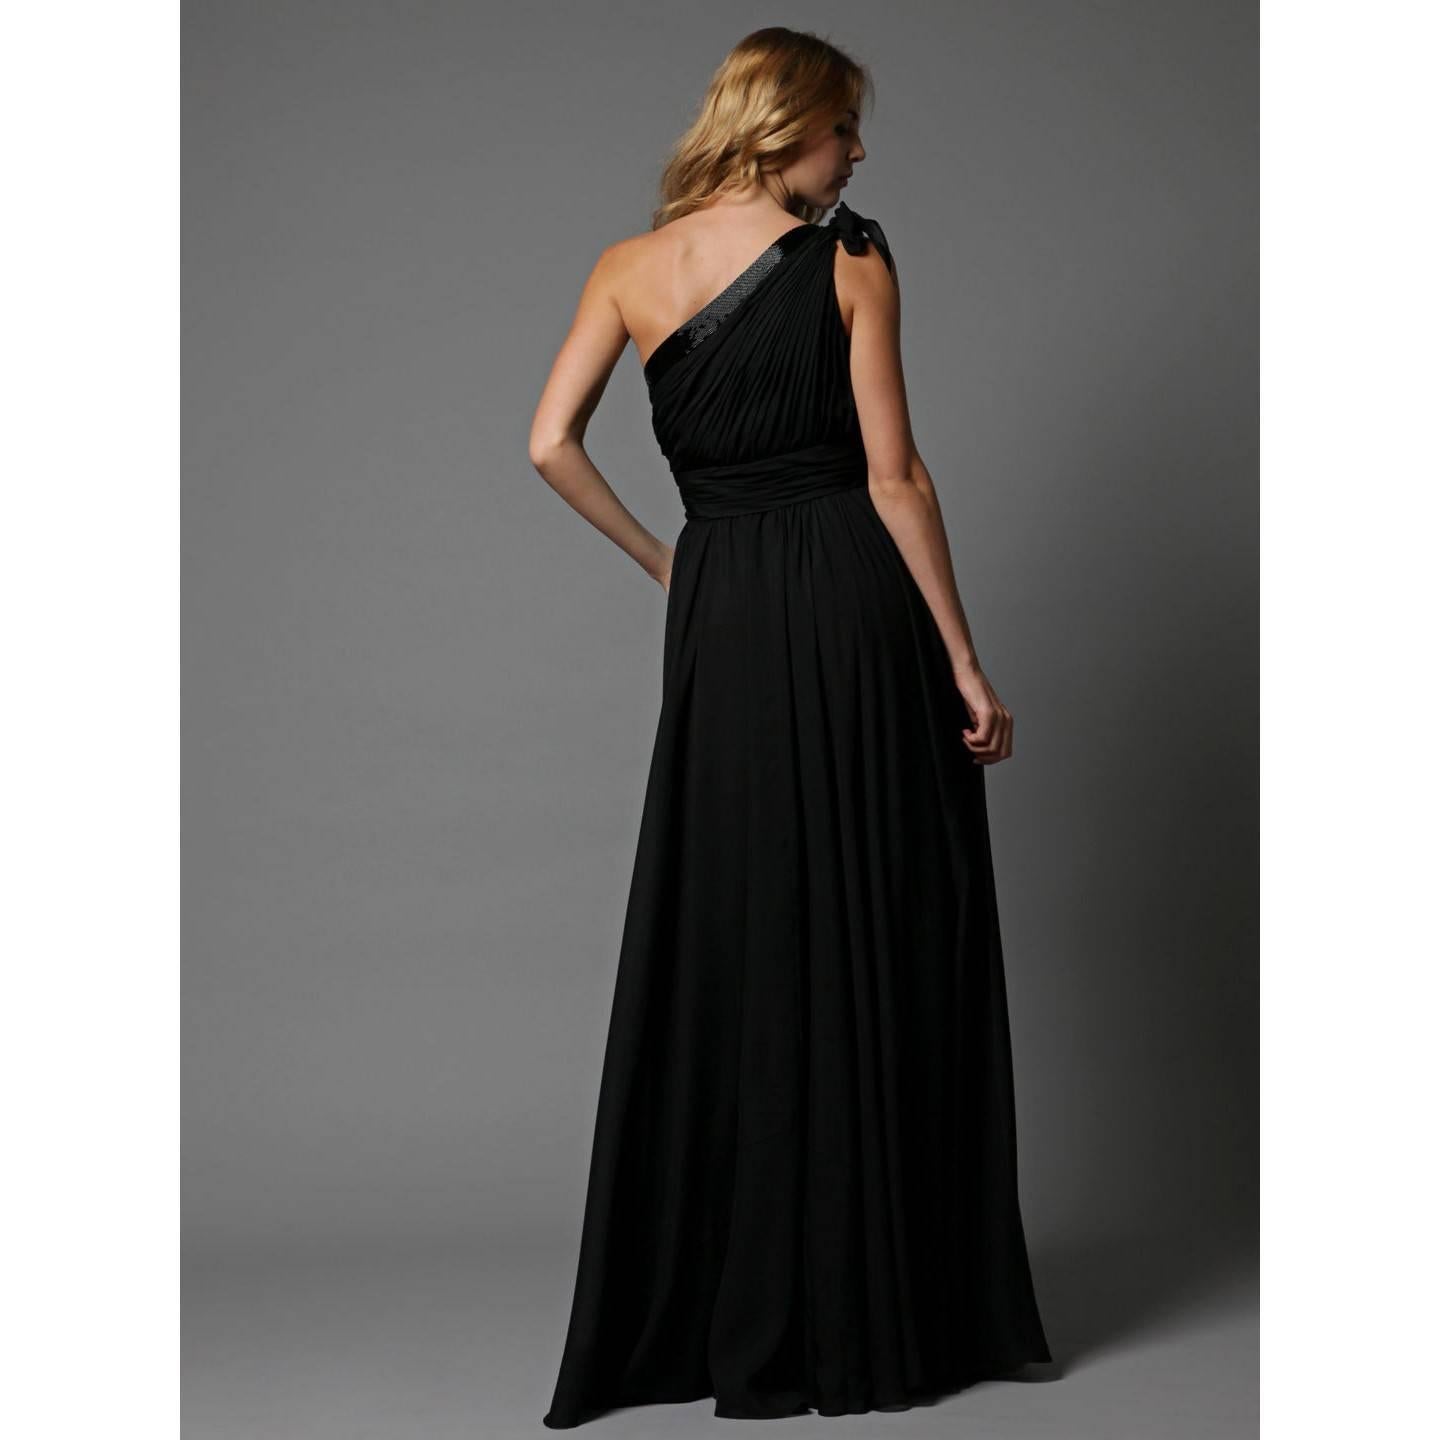 New Badgley Mischka Couture Evening Dress Gown Sz 4 2